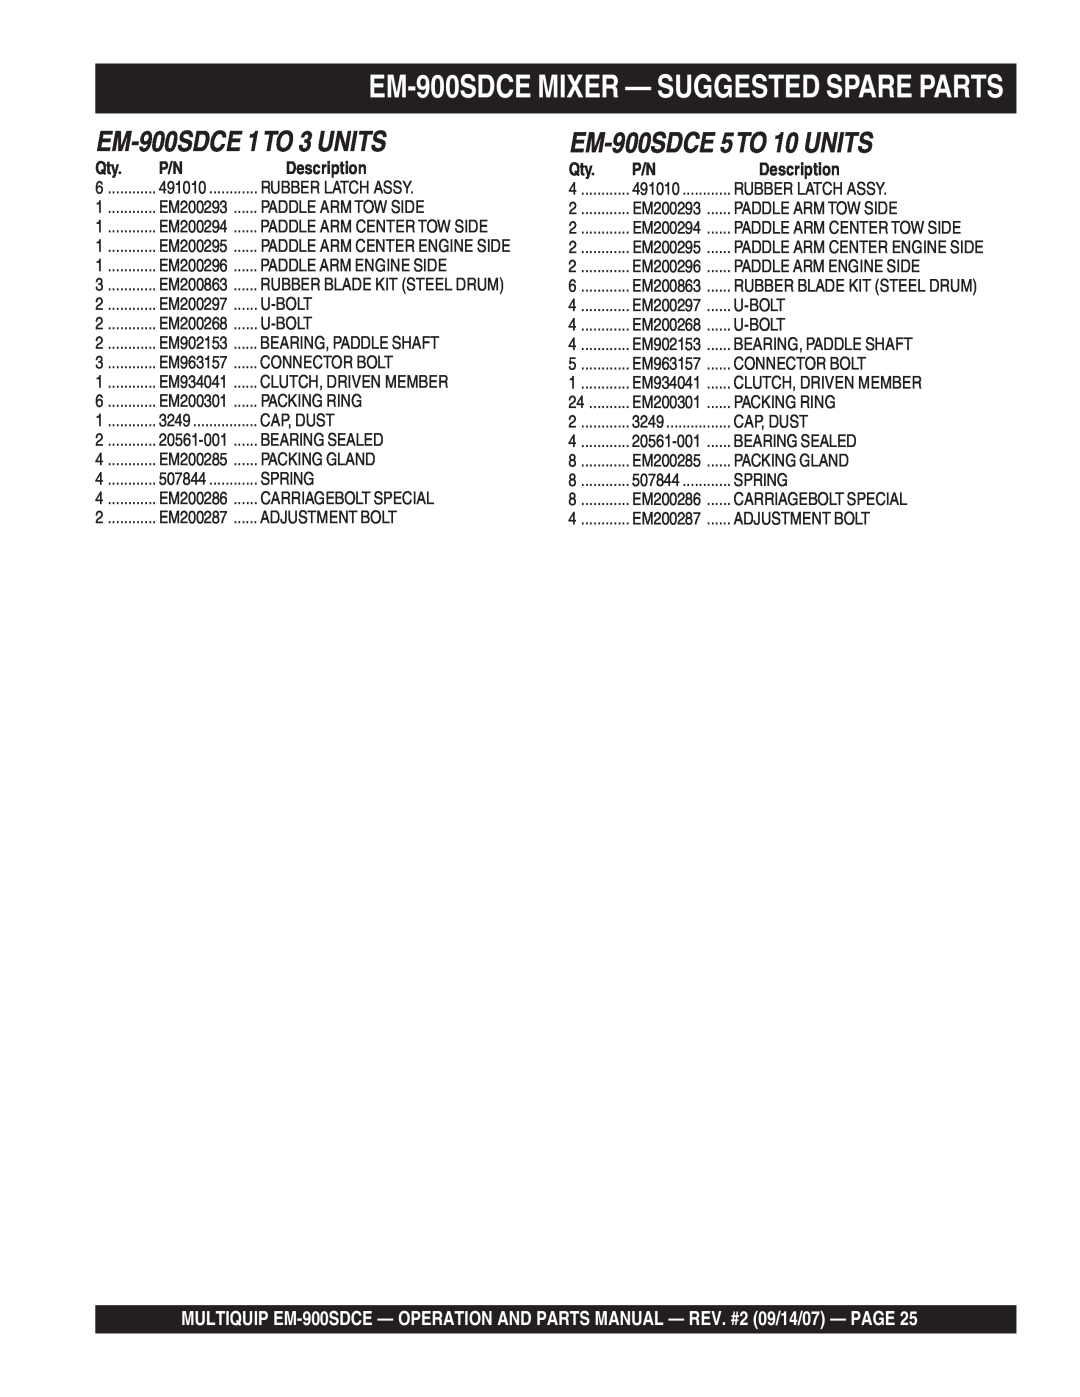 Multiquip manual EM-900SDCEMIXER — SUGGESTED SPARE PARTS, EM-900SDCE1TO 3 UNITS, EM-900SDCE5TO 10 UNITS, Description 